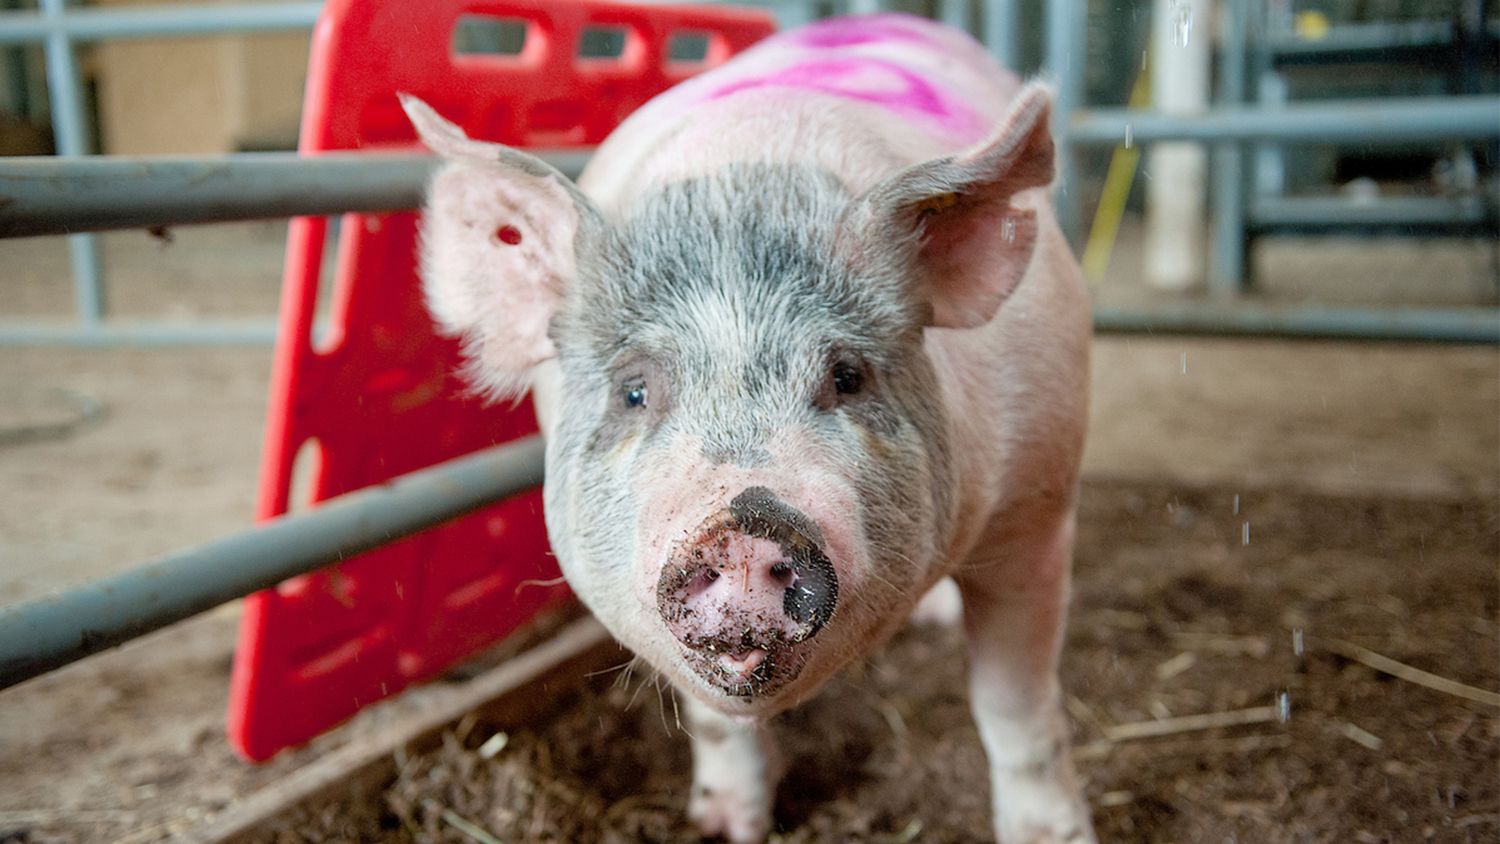 close up of a pig